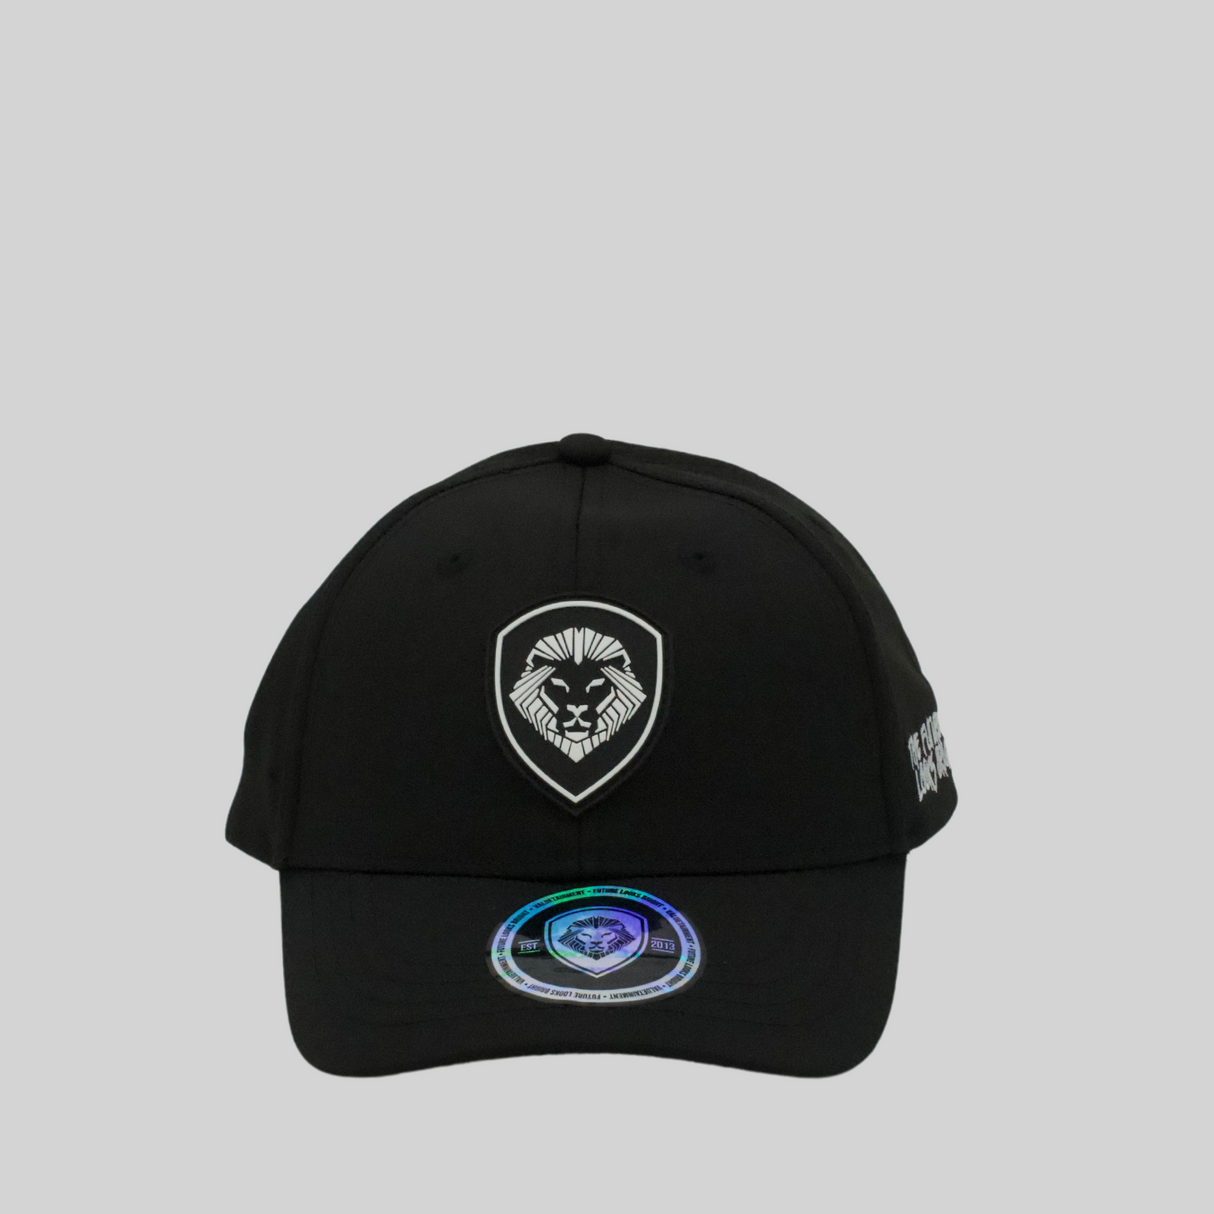 Kids VT Shield Logo Future Looks Bright Black Snapback Hat